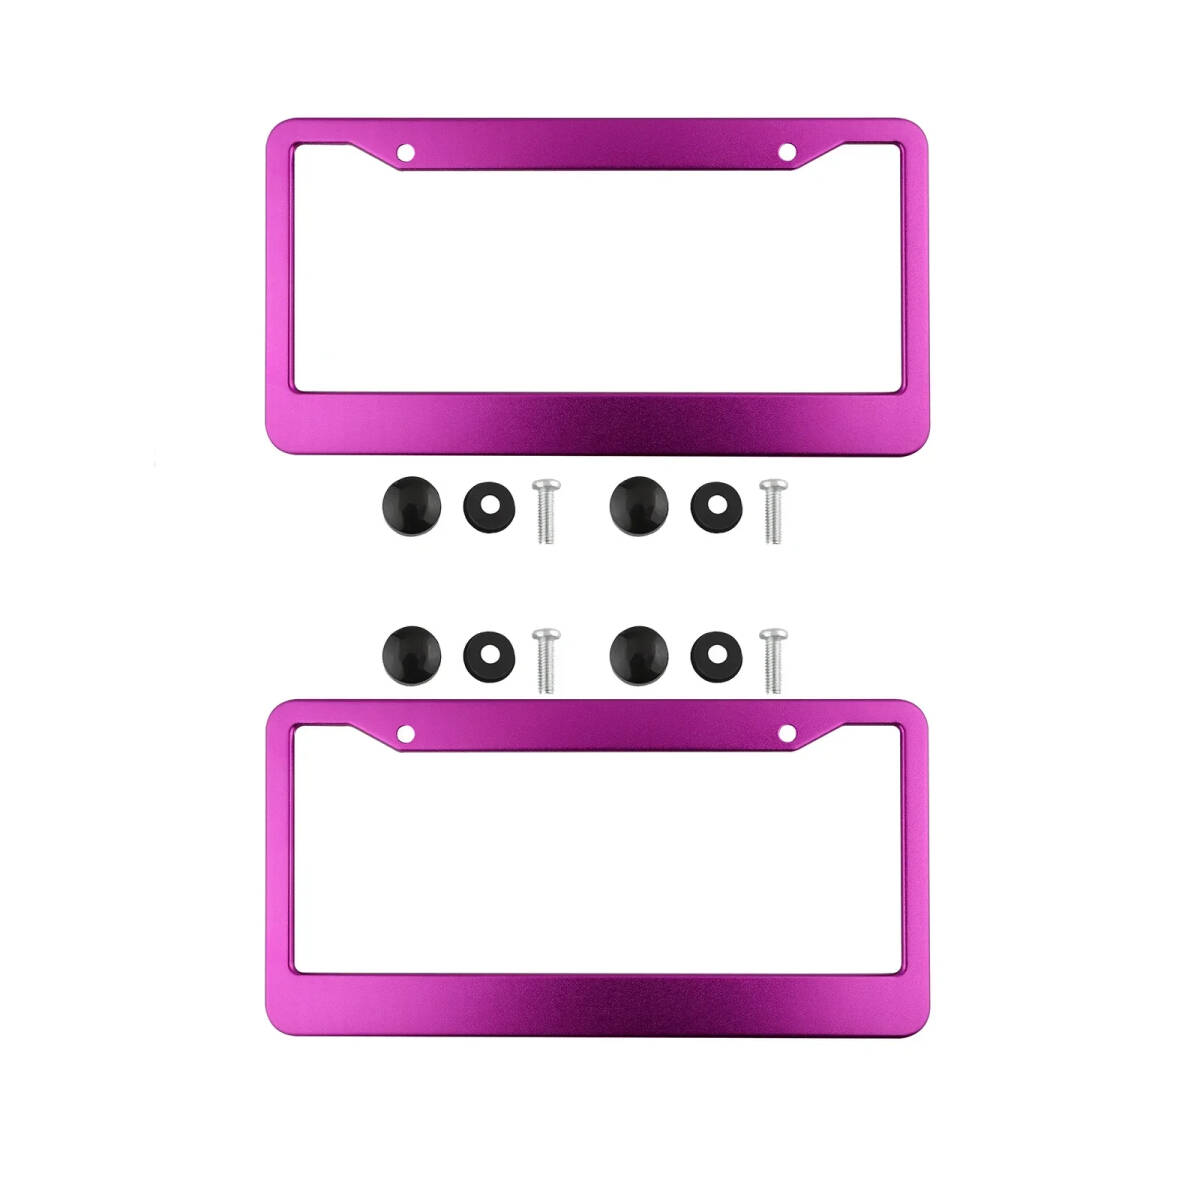  number plate boruda- car license frame aluminium alloy number plate bracket car accessory 2 piece set purple 